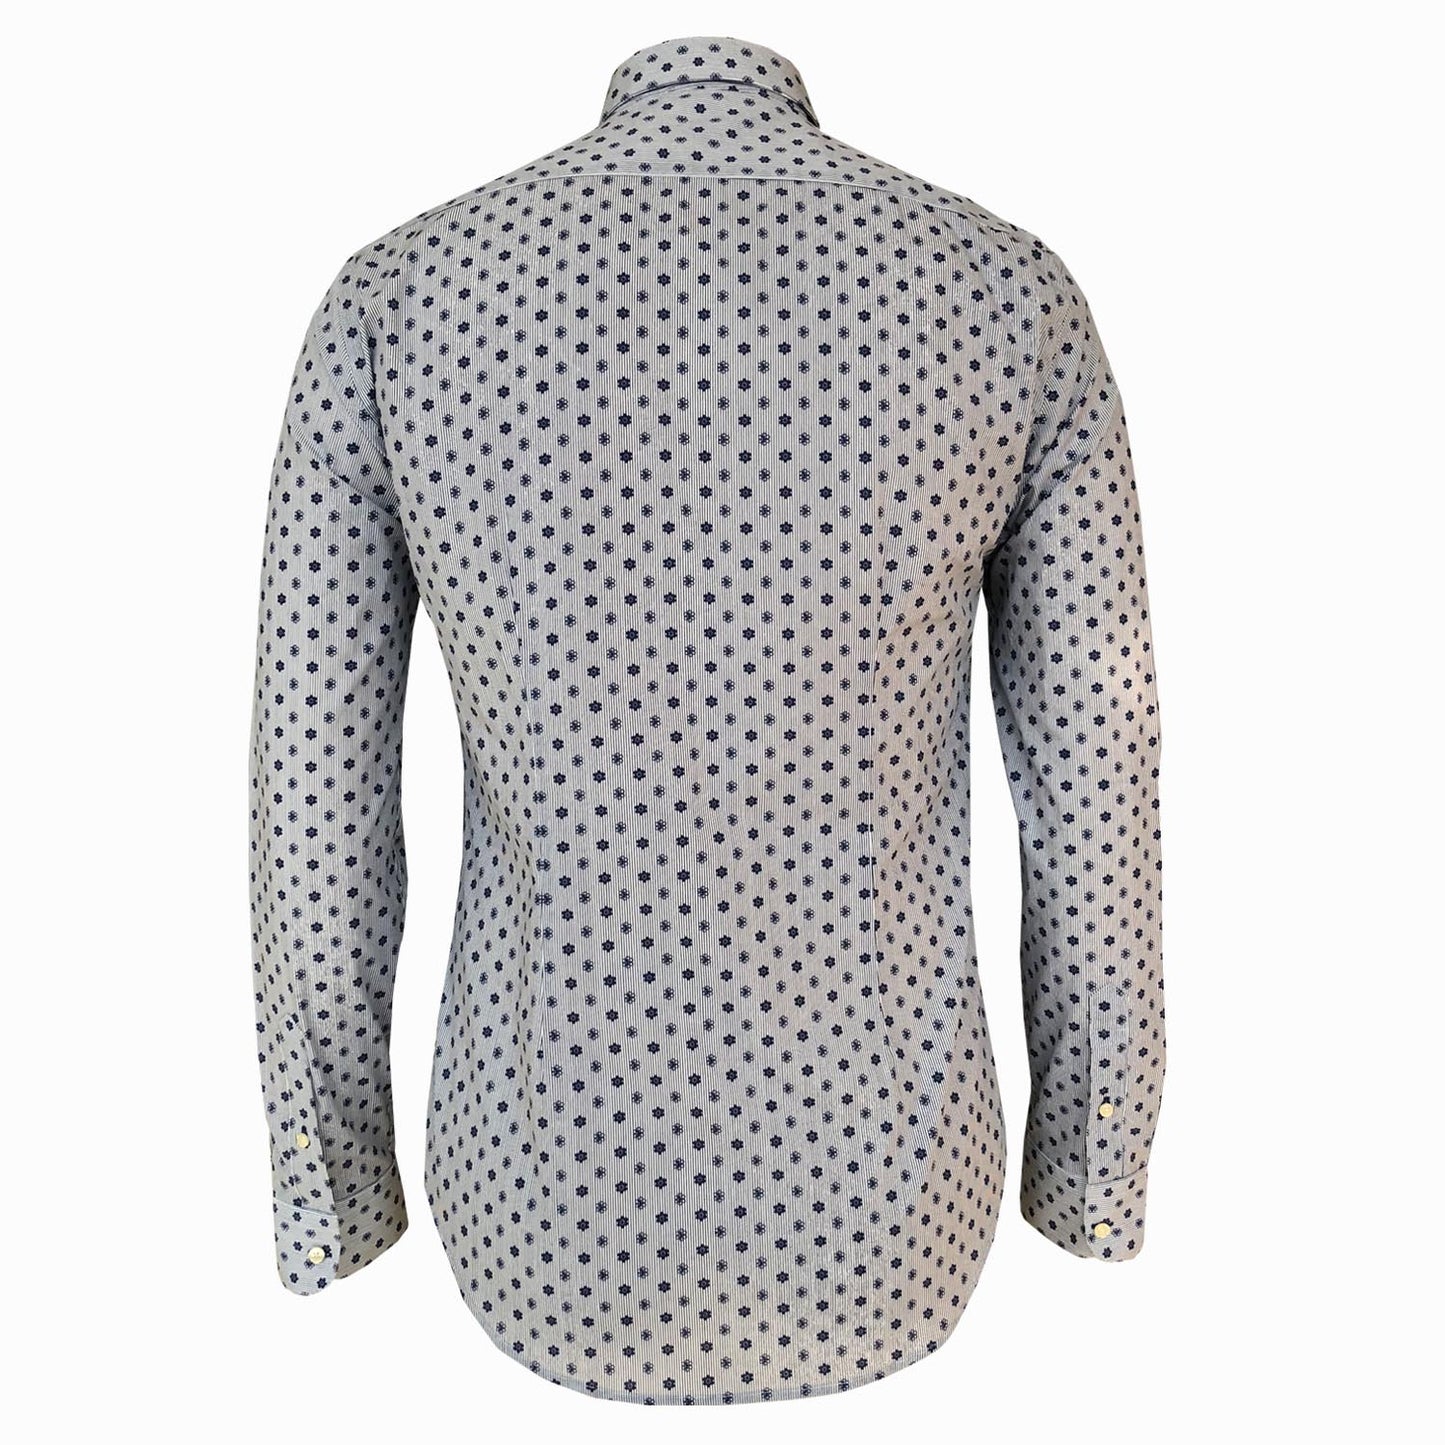 LUXE HOMME SELECT - Premium Oxford Long Sleeve Shirt (Conaught) - LabelledUp.com